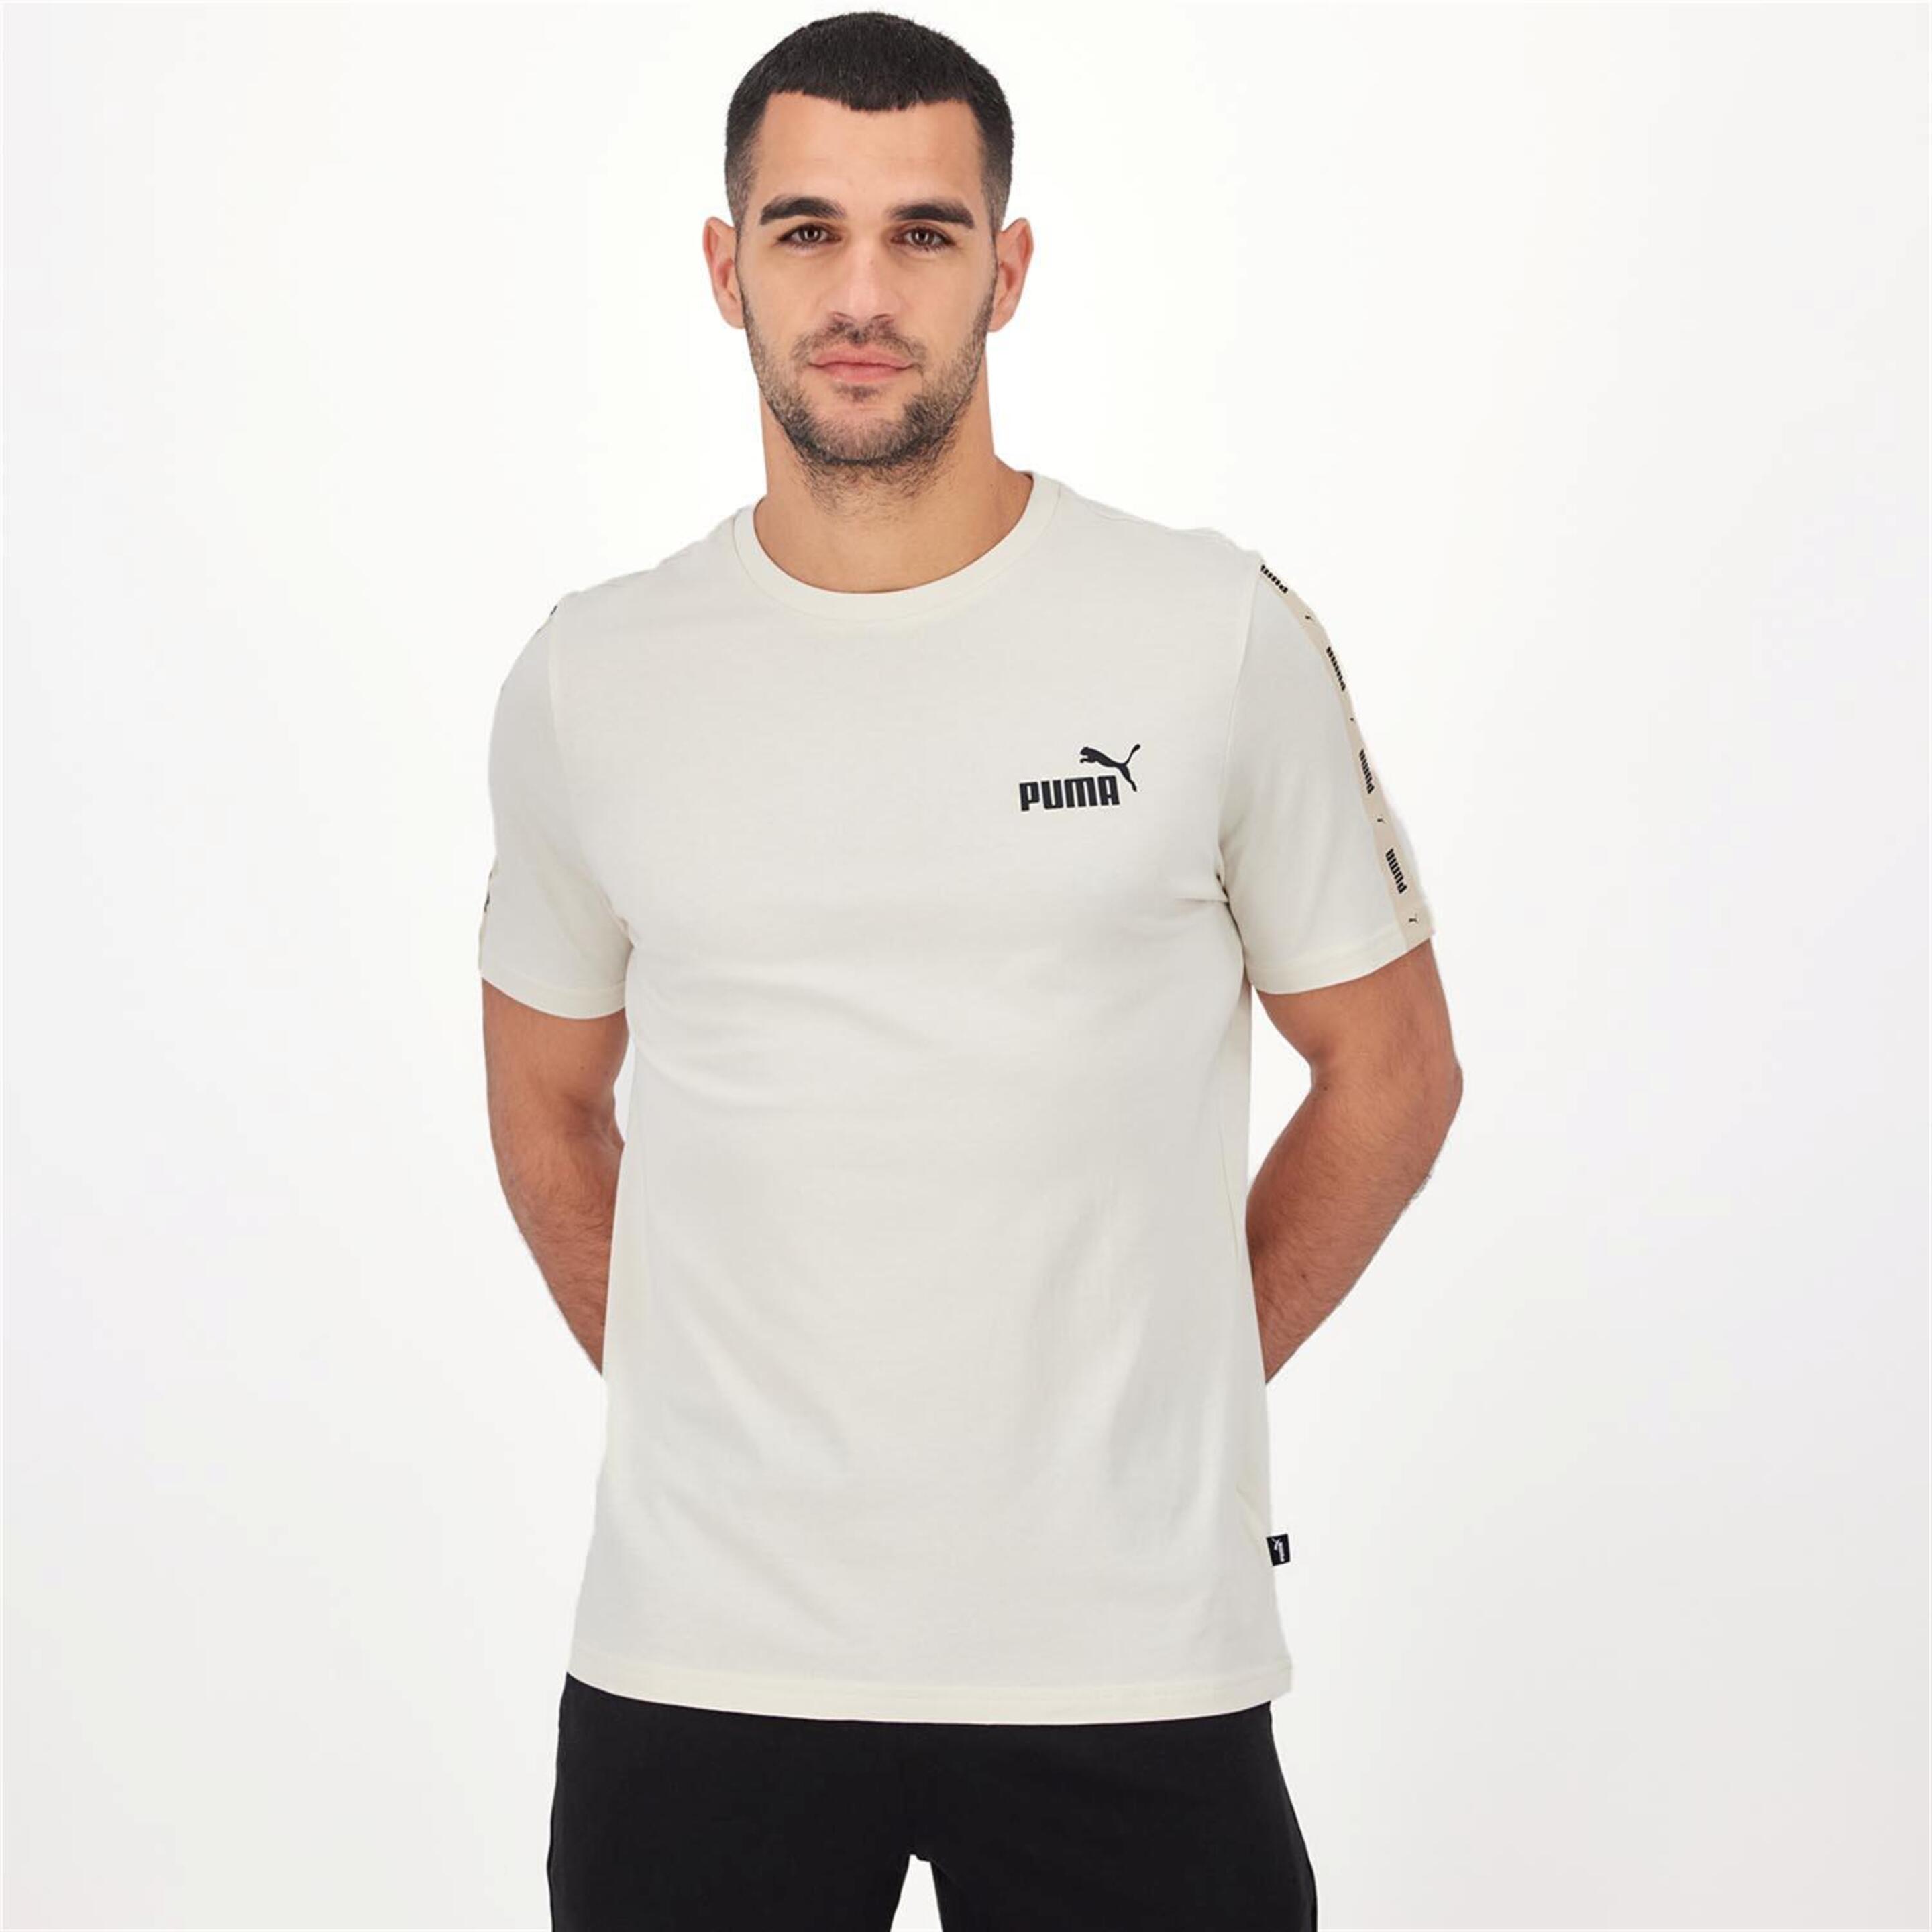 Puma Tape - blanco - Camiseta Hombre